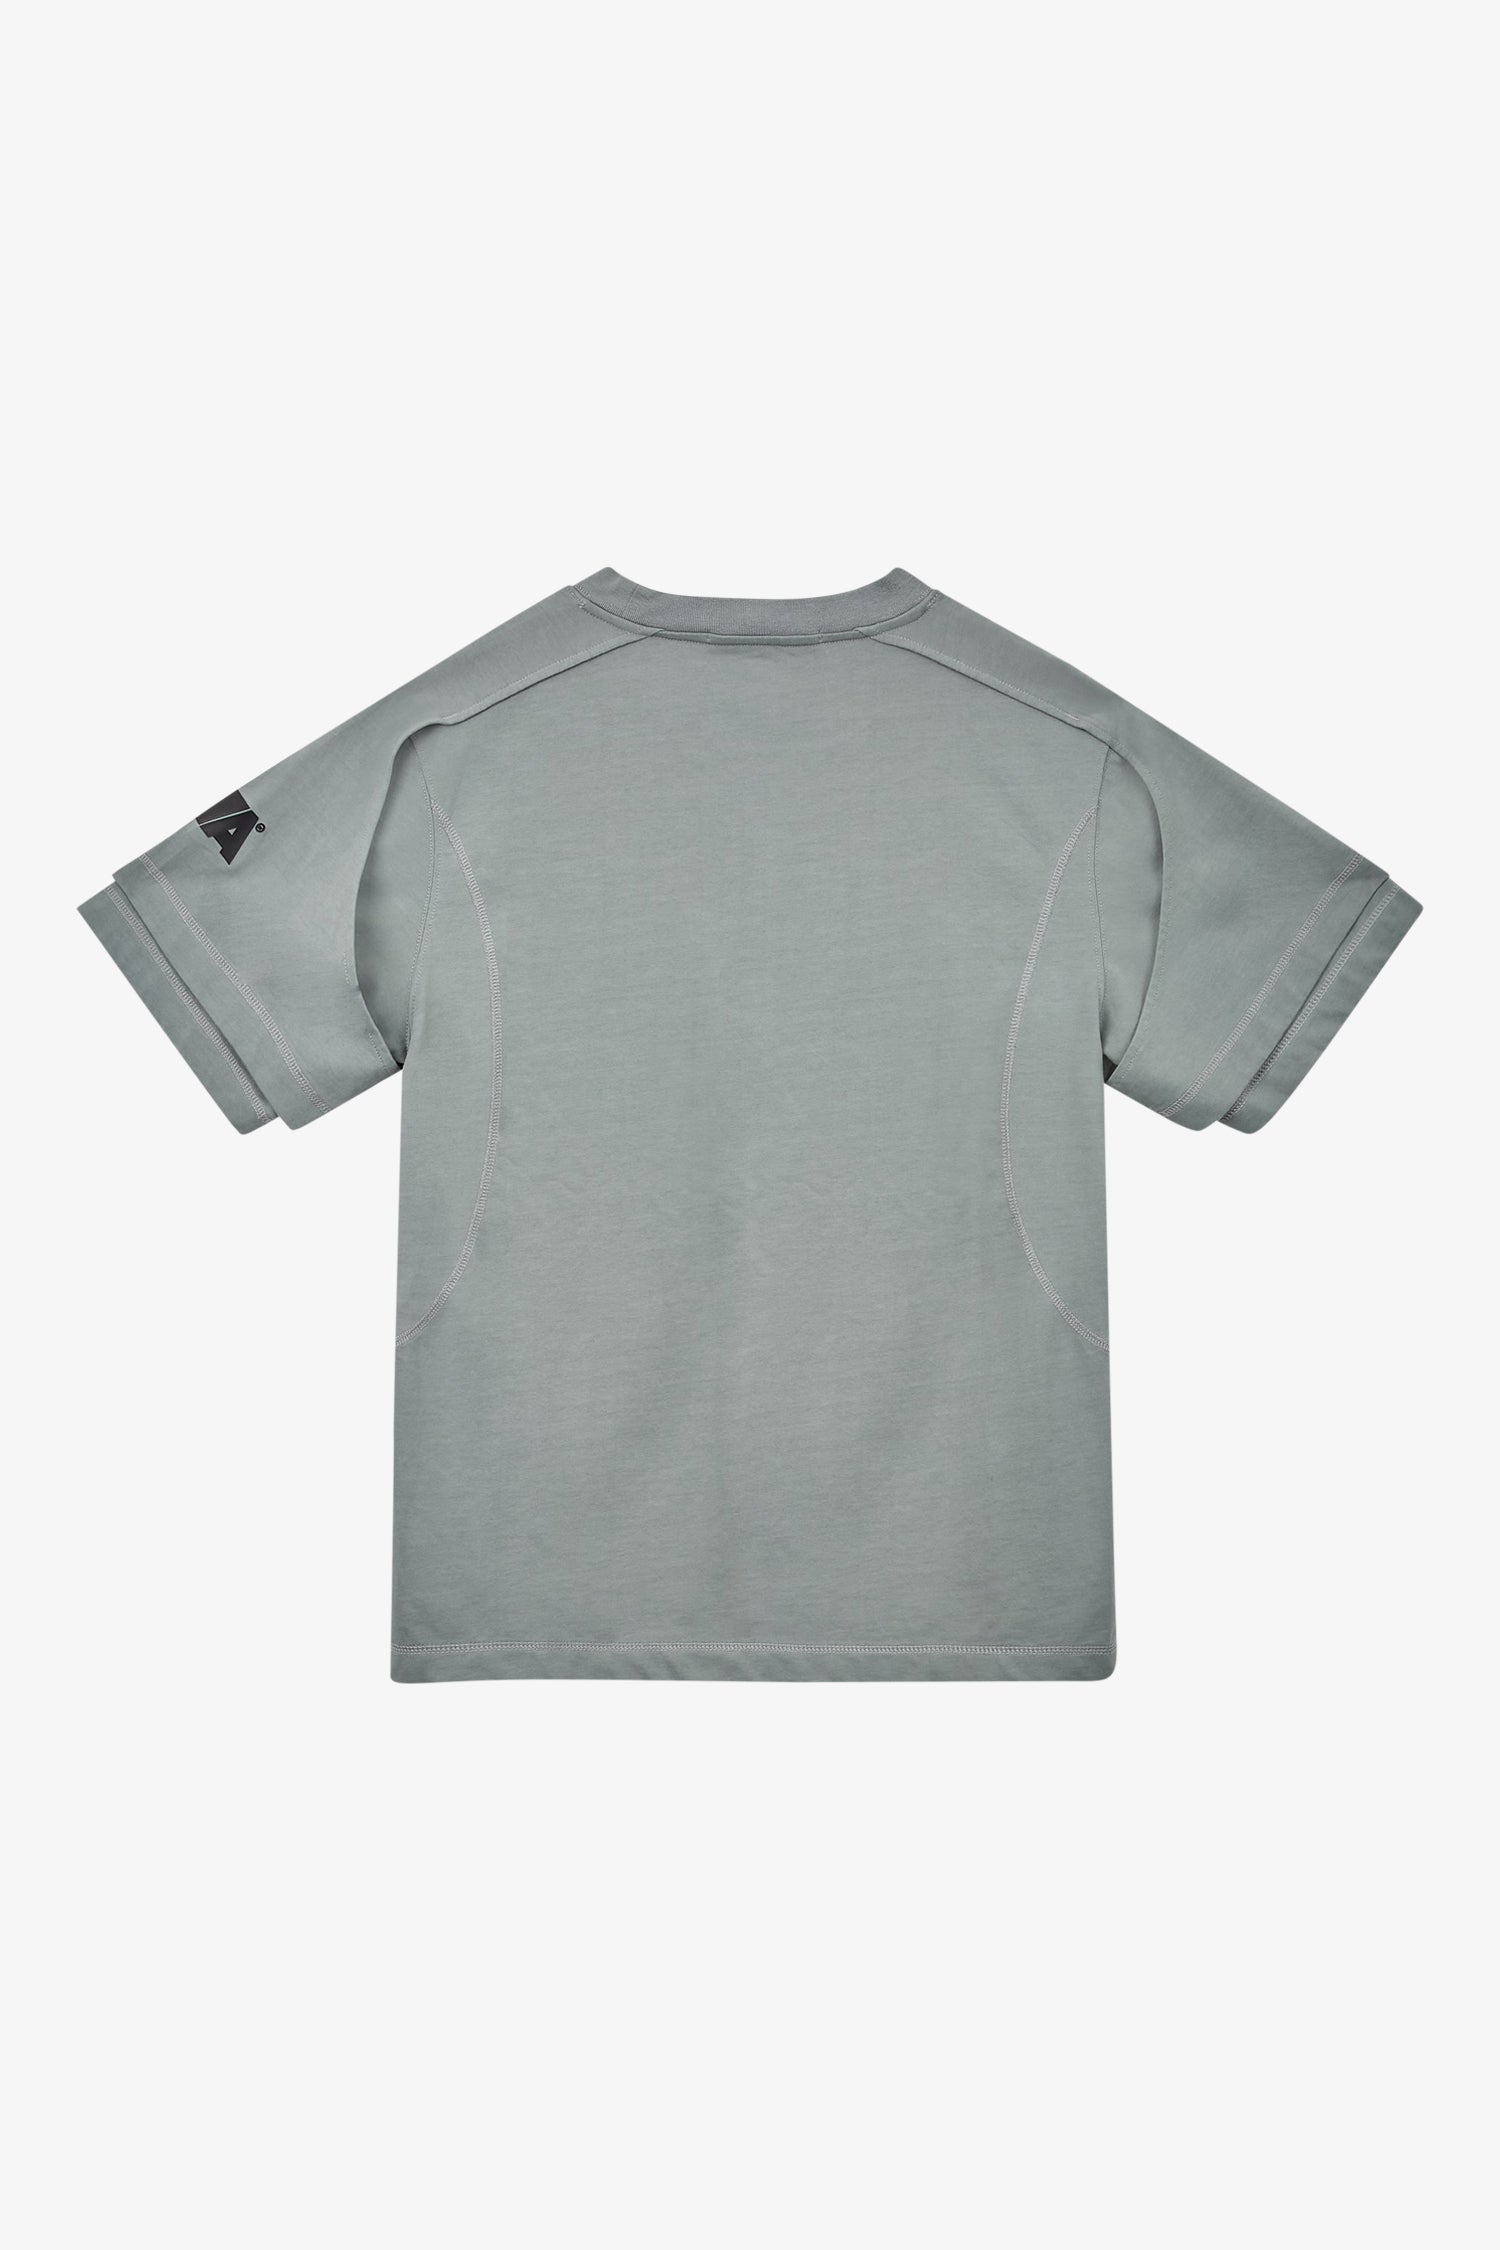 Selectshop FRAME - AFFIX Dual Sleeve Tee T-Shirts Dubai